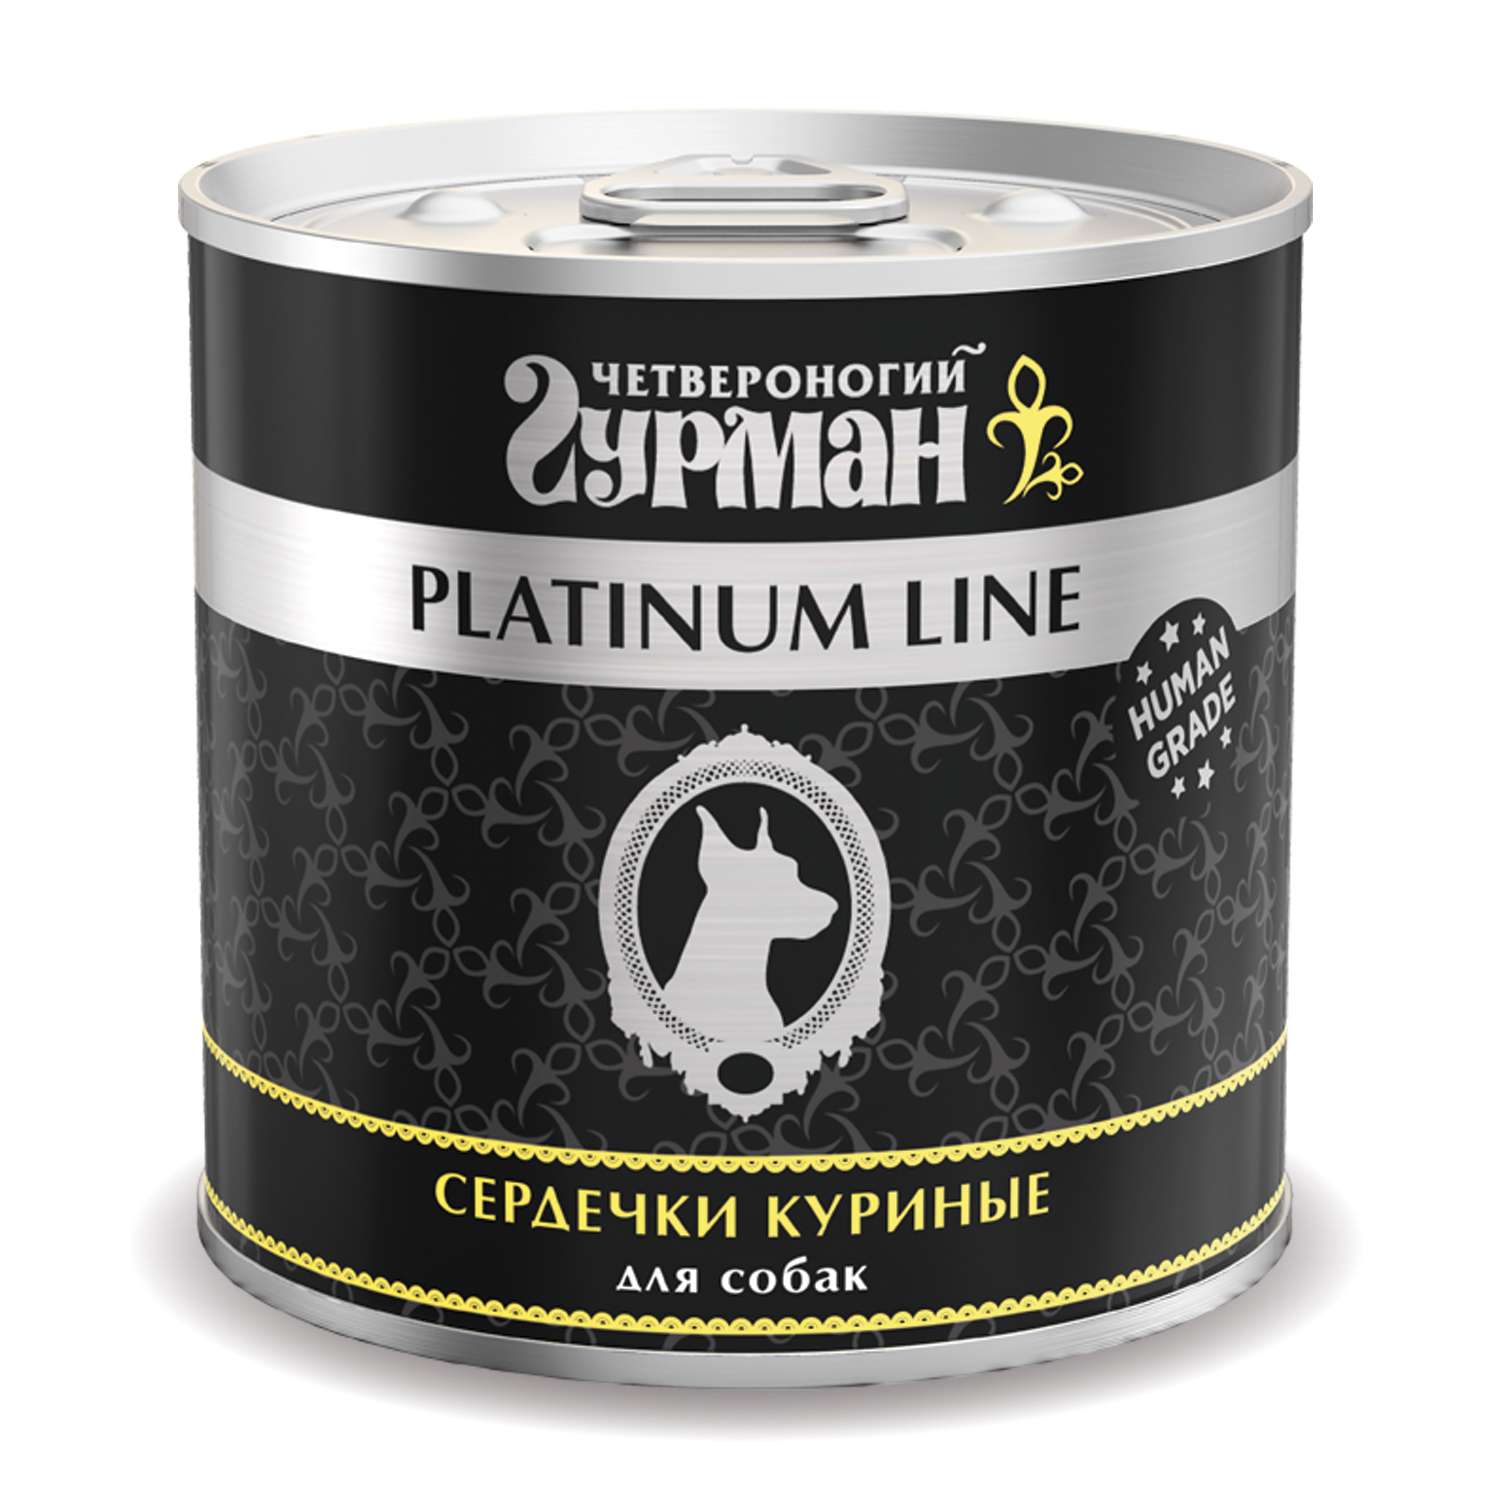 Корм для собак Четвероногий Гурман Platinum сердечки куриные в желе 500г - фото 1